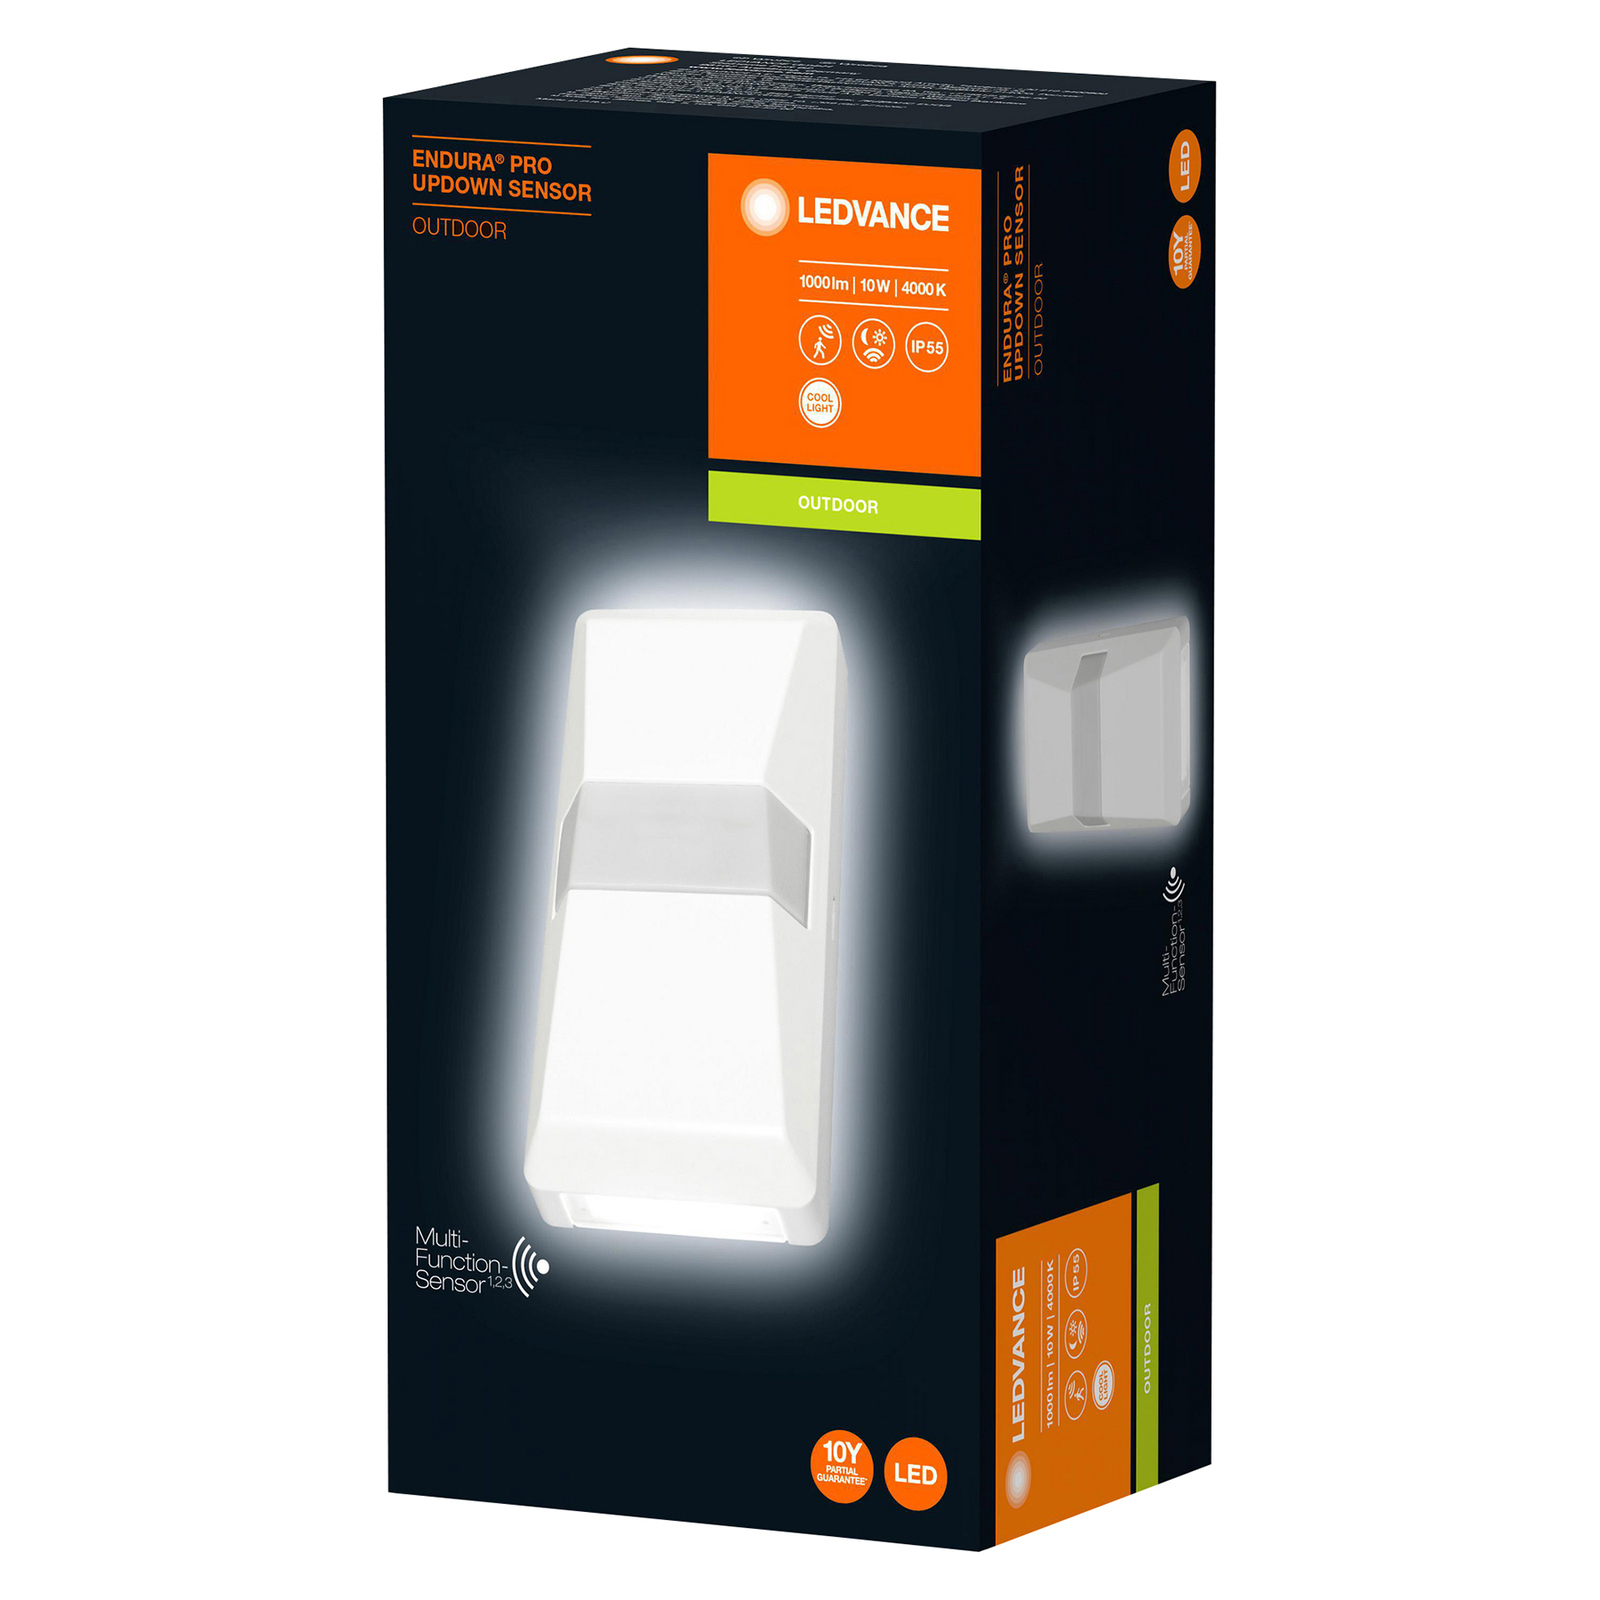 LEDVANCE Endura Pro UpDown Sensor white